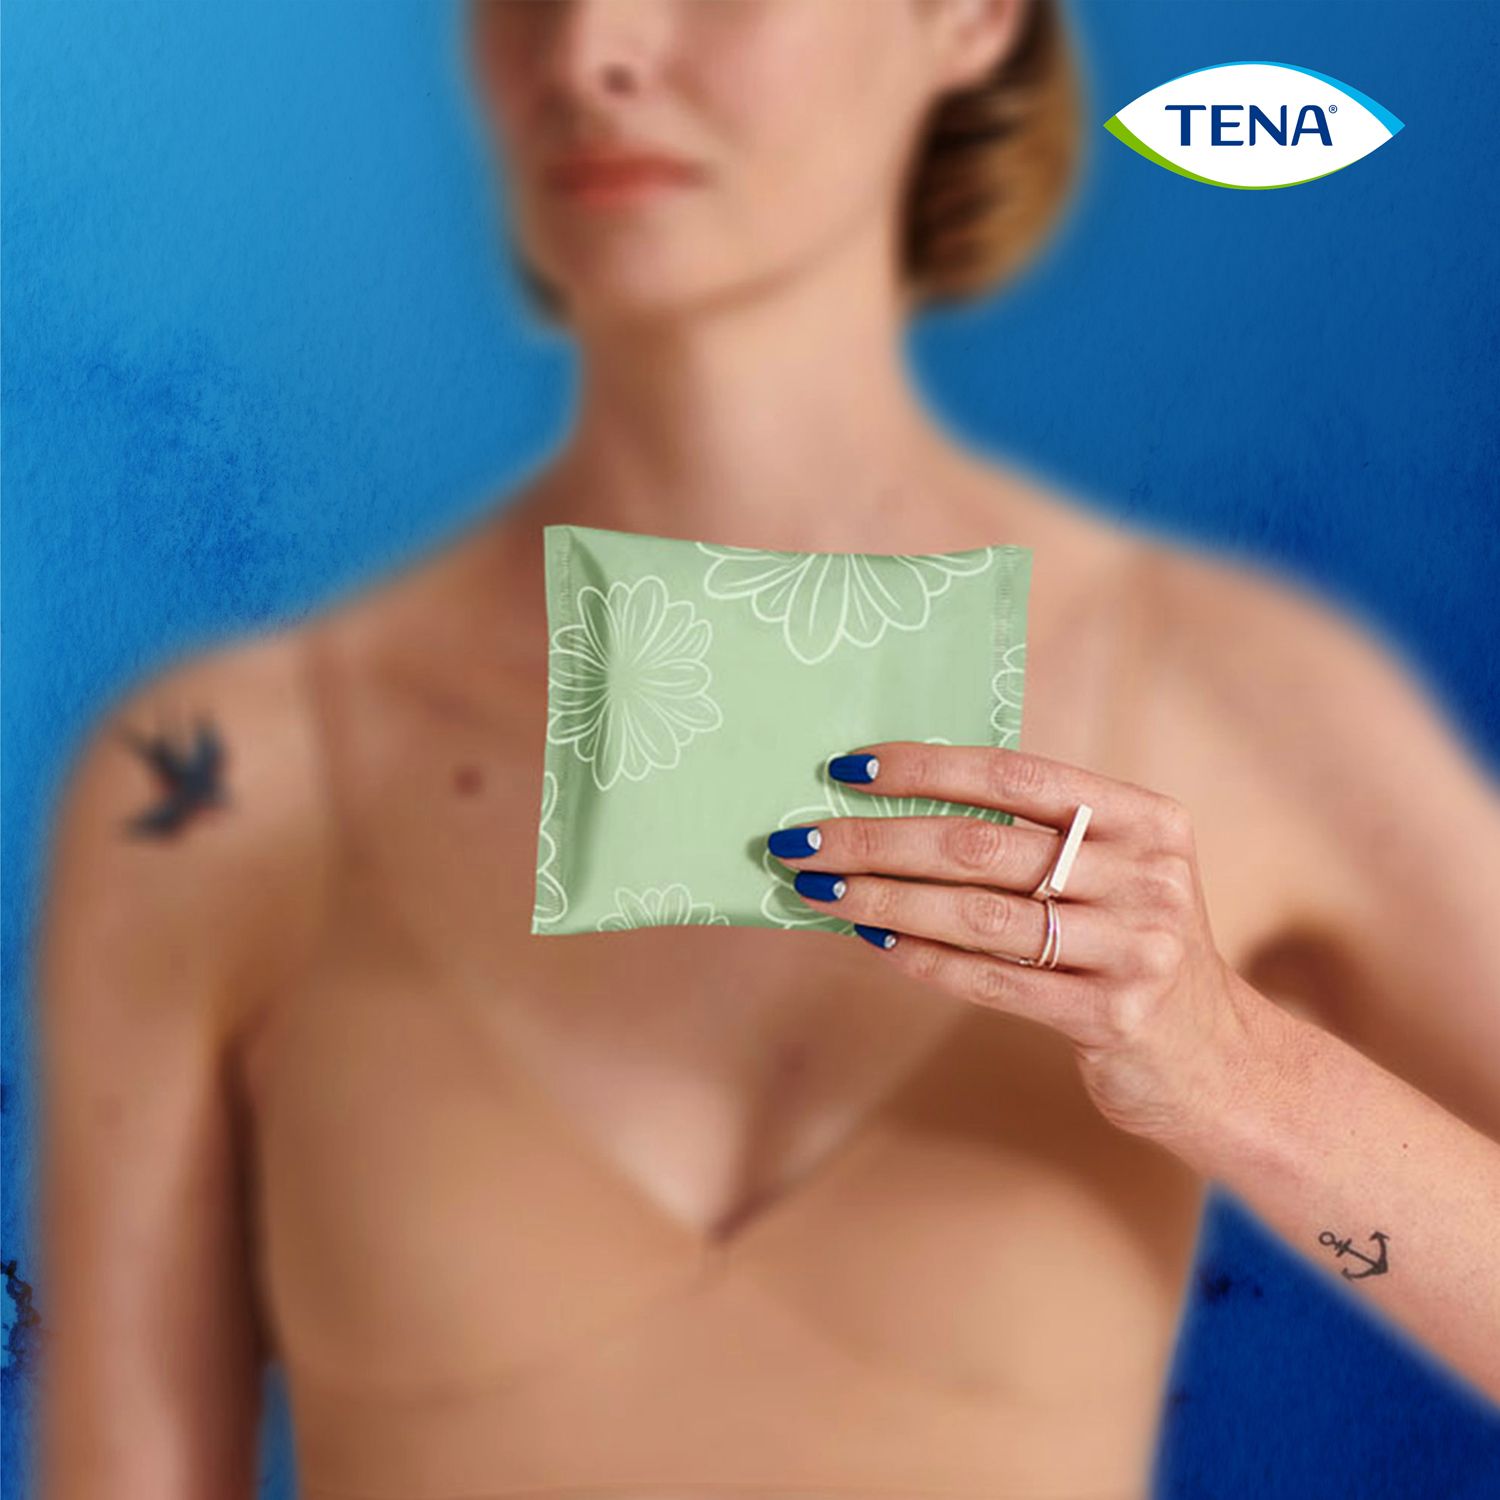 TENA Discreet Inkontinenz Einlagen Mini